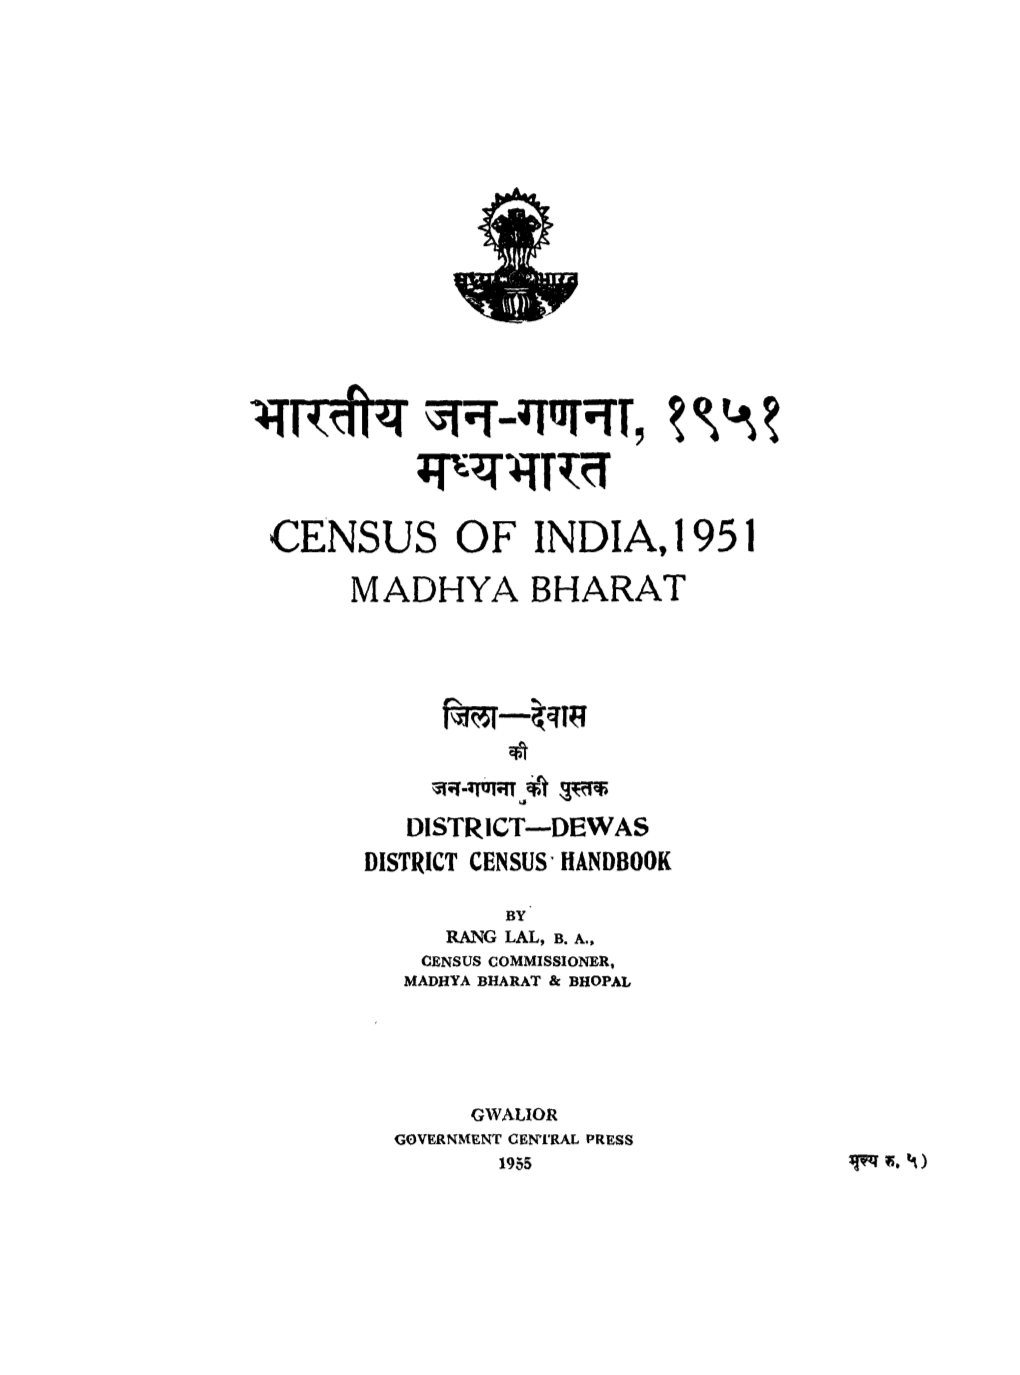 District Census Handbook, Dewas, Madhya Pradesh